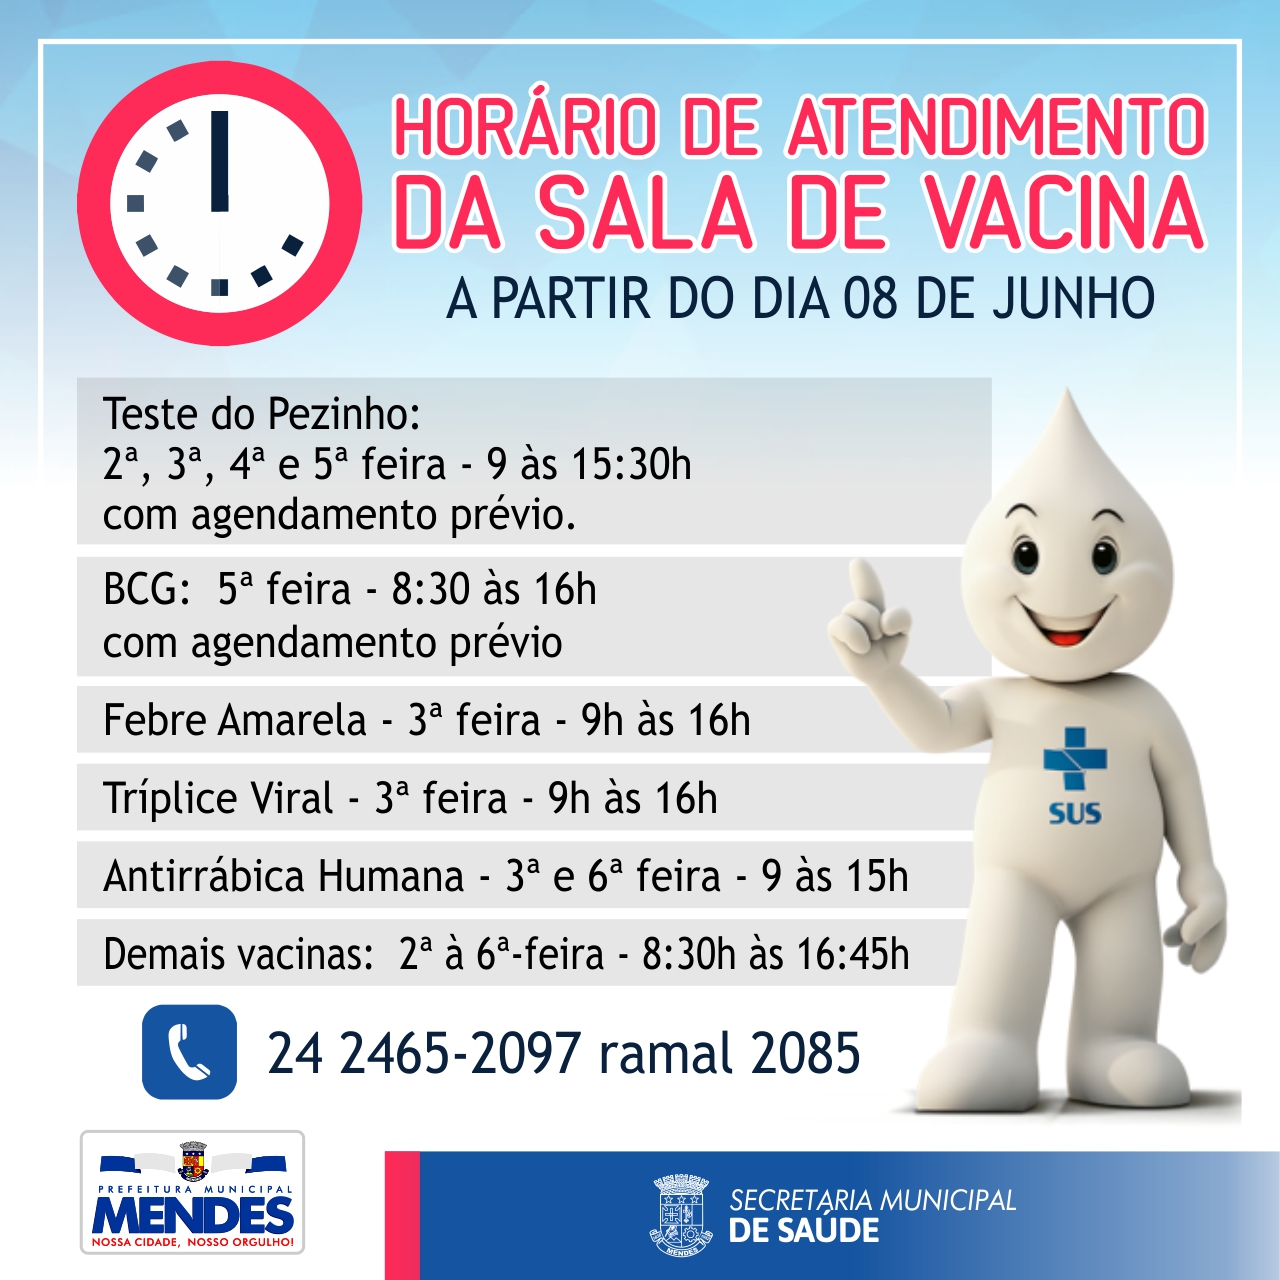 sala_de_vacina_-_horario_2020.jpg